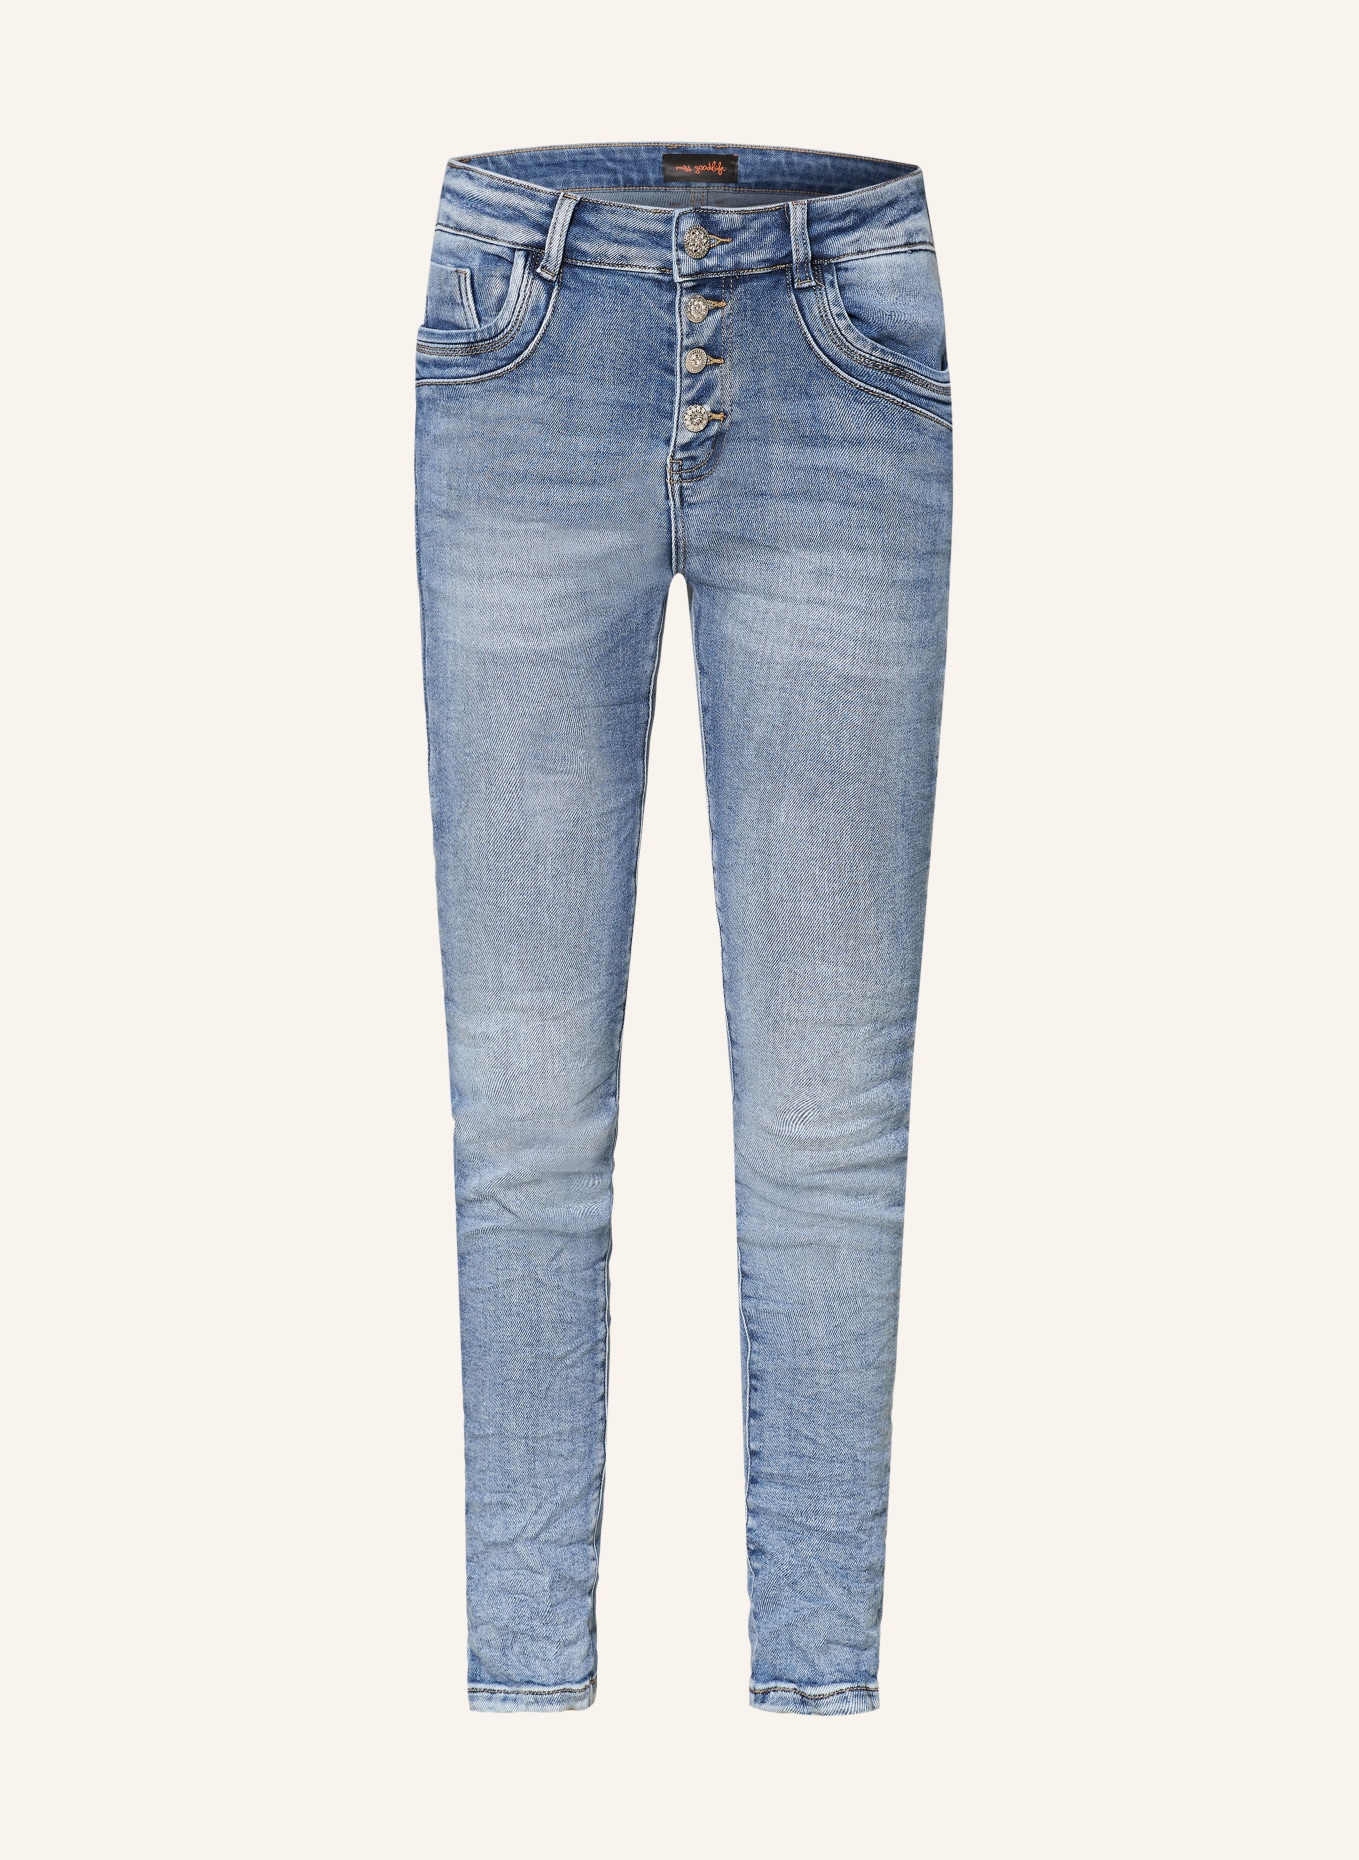 miss goodlife Skinny Jeans STAR, Farbe: LIGHT BLUE (Bild 1)